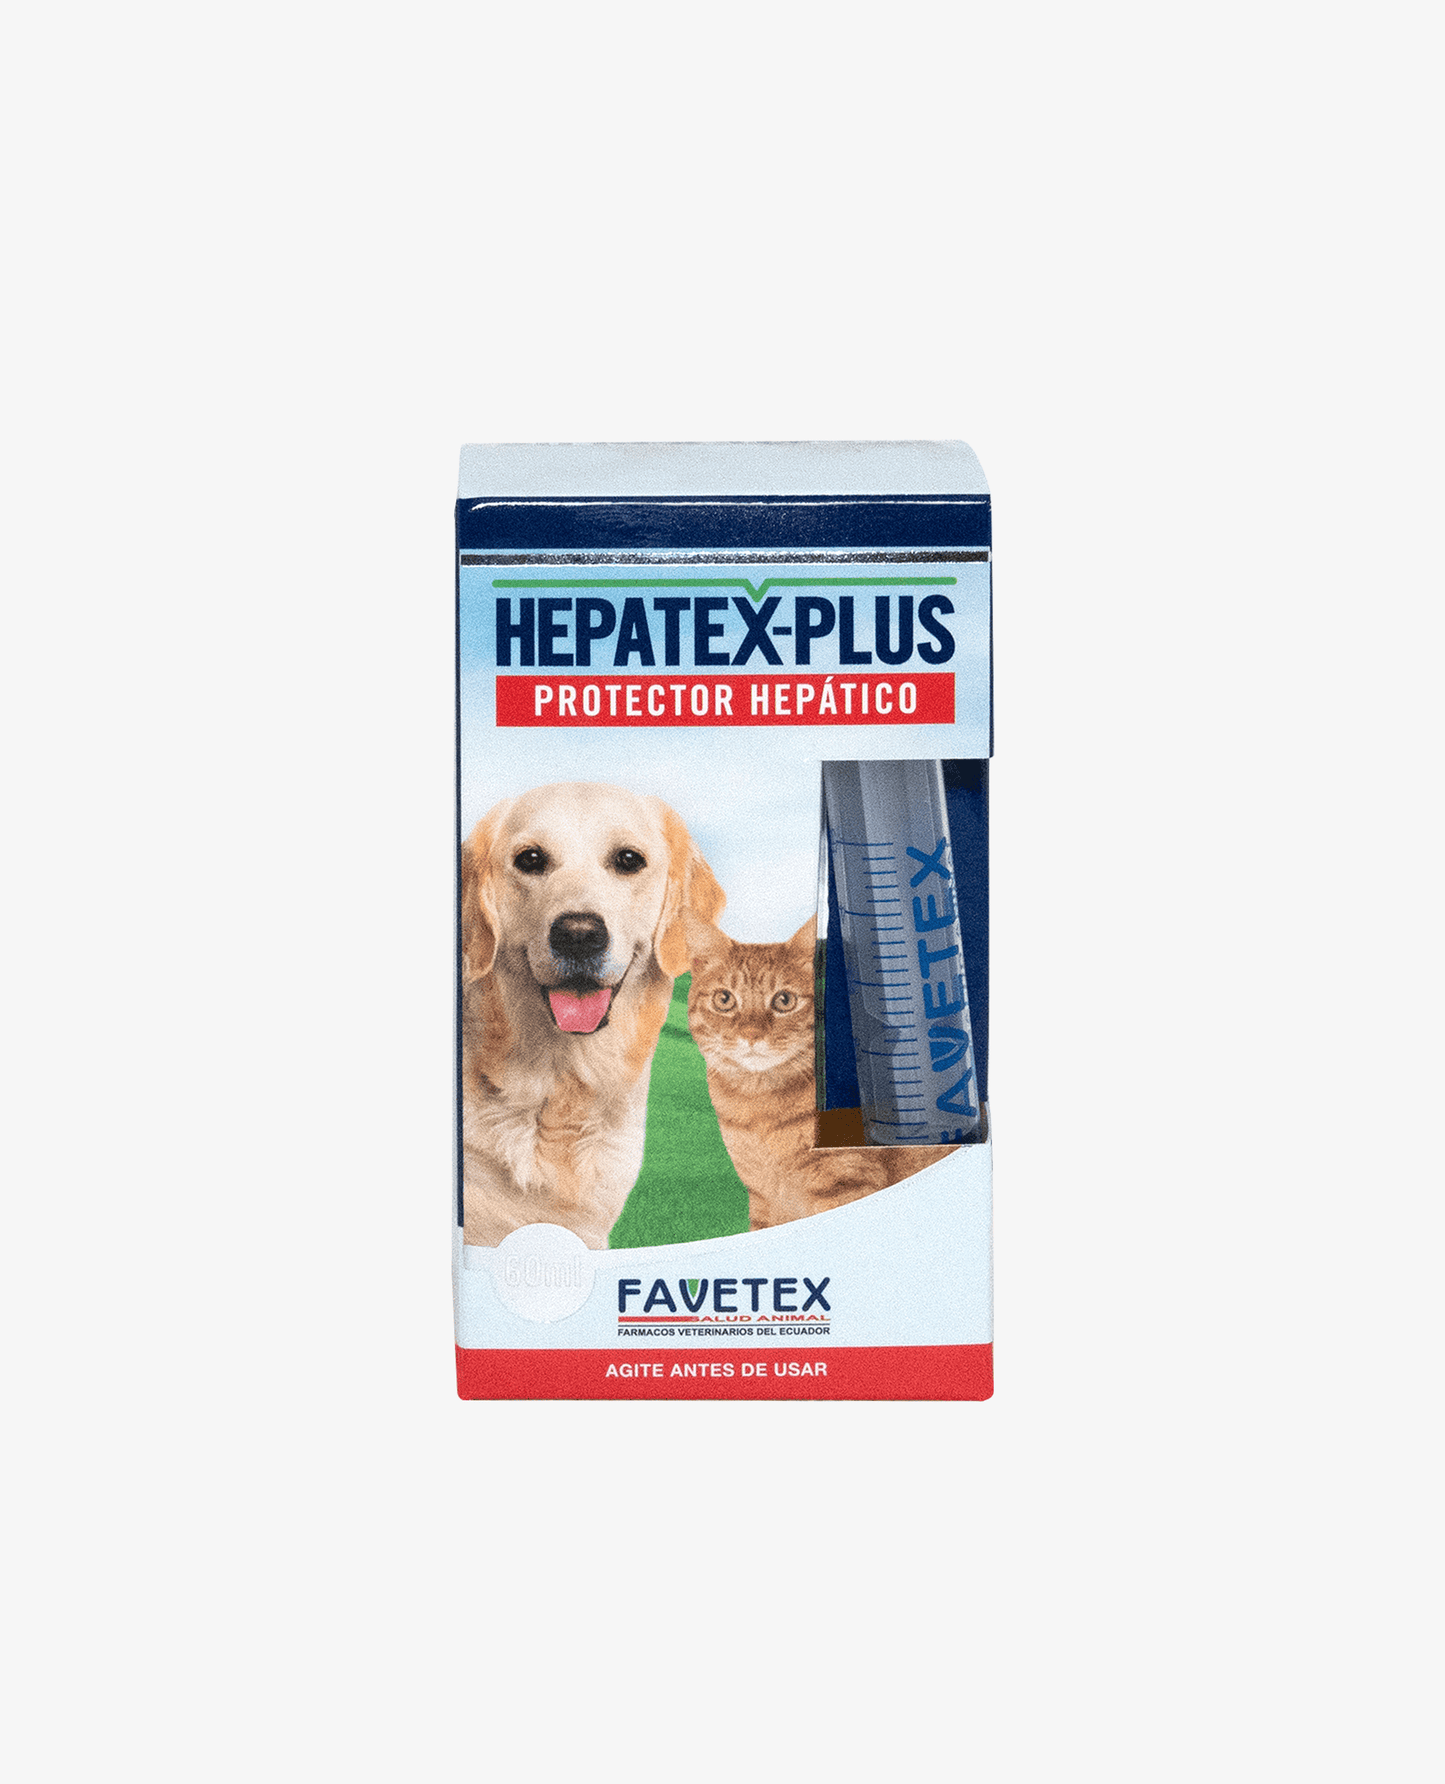 Hepatex plus mascota - 60ml - AvicMartin Farmacia Veterinaria 